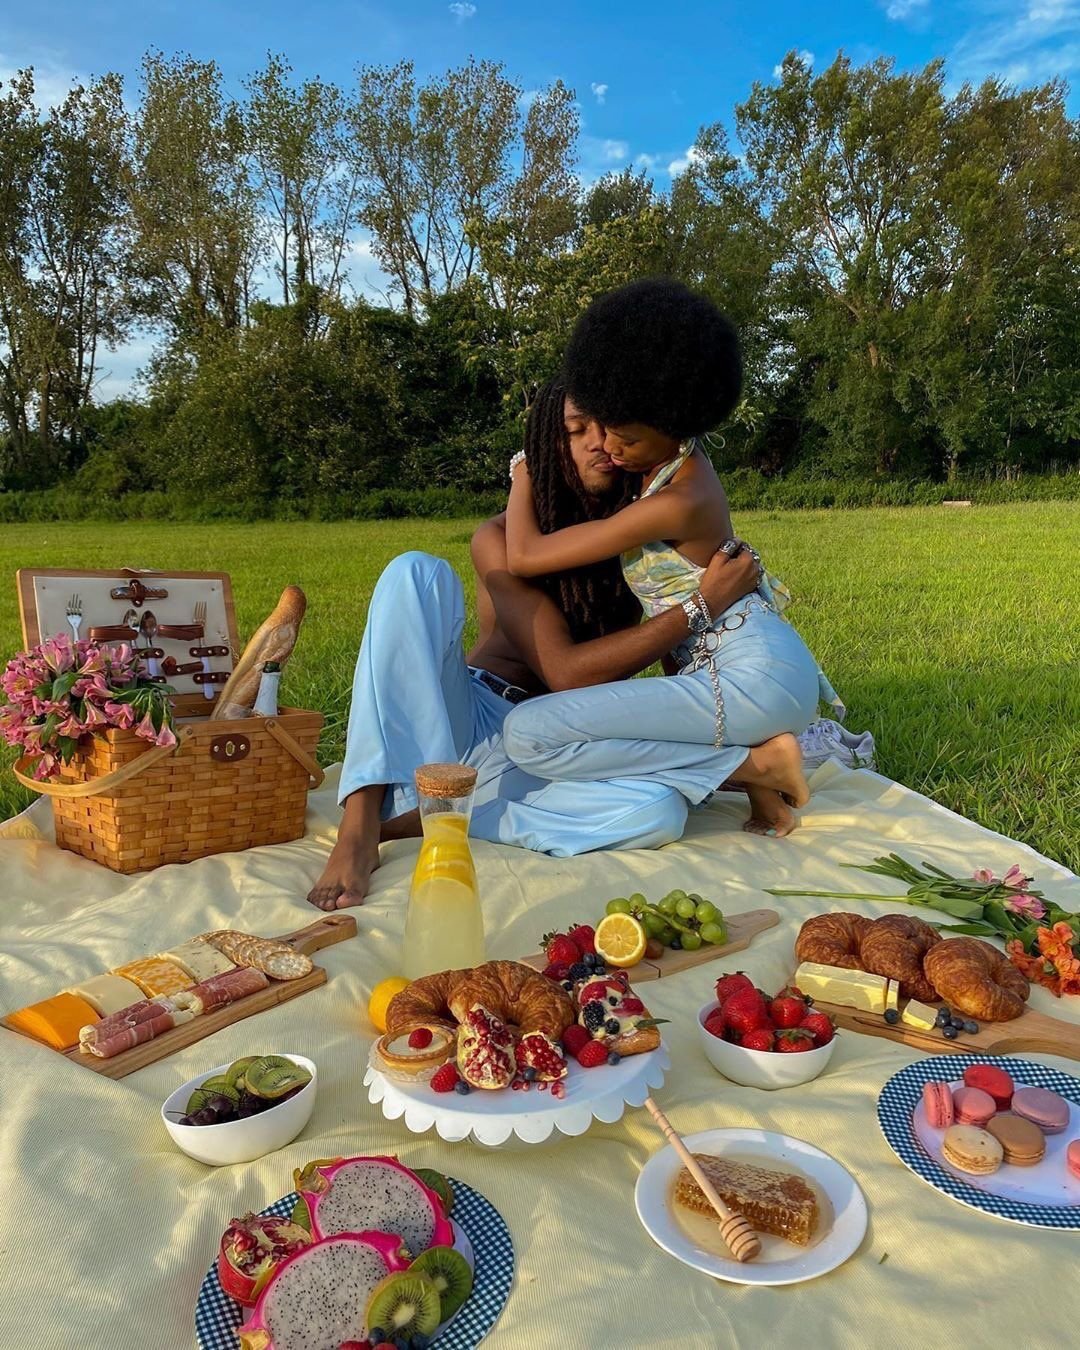 Пикник едет. Пикник на природе. Еда на пикник. Красивый пикник на природе. Летний пикник.